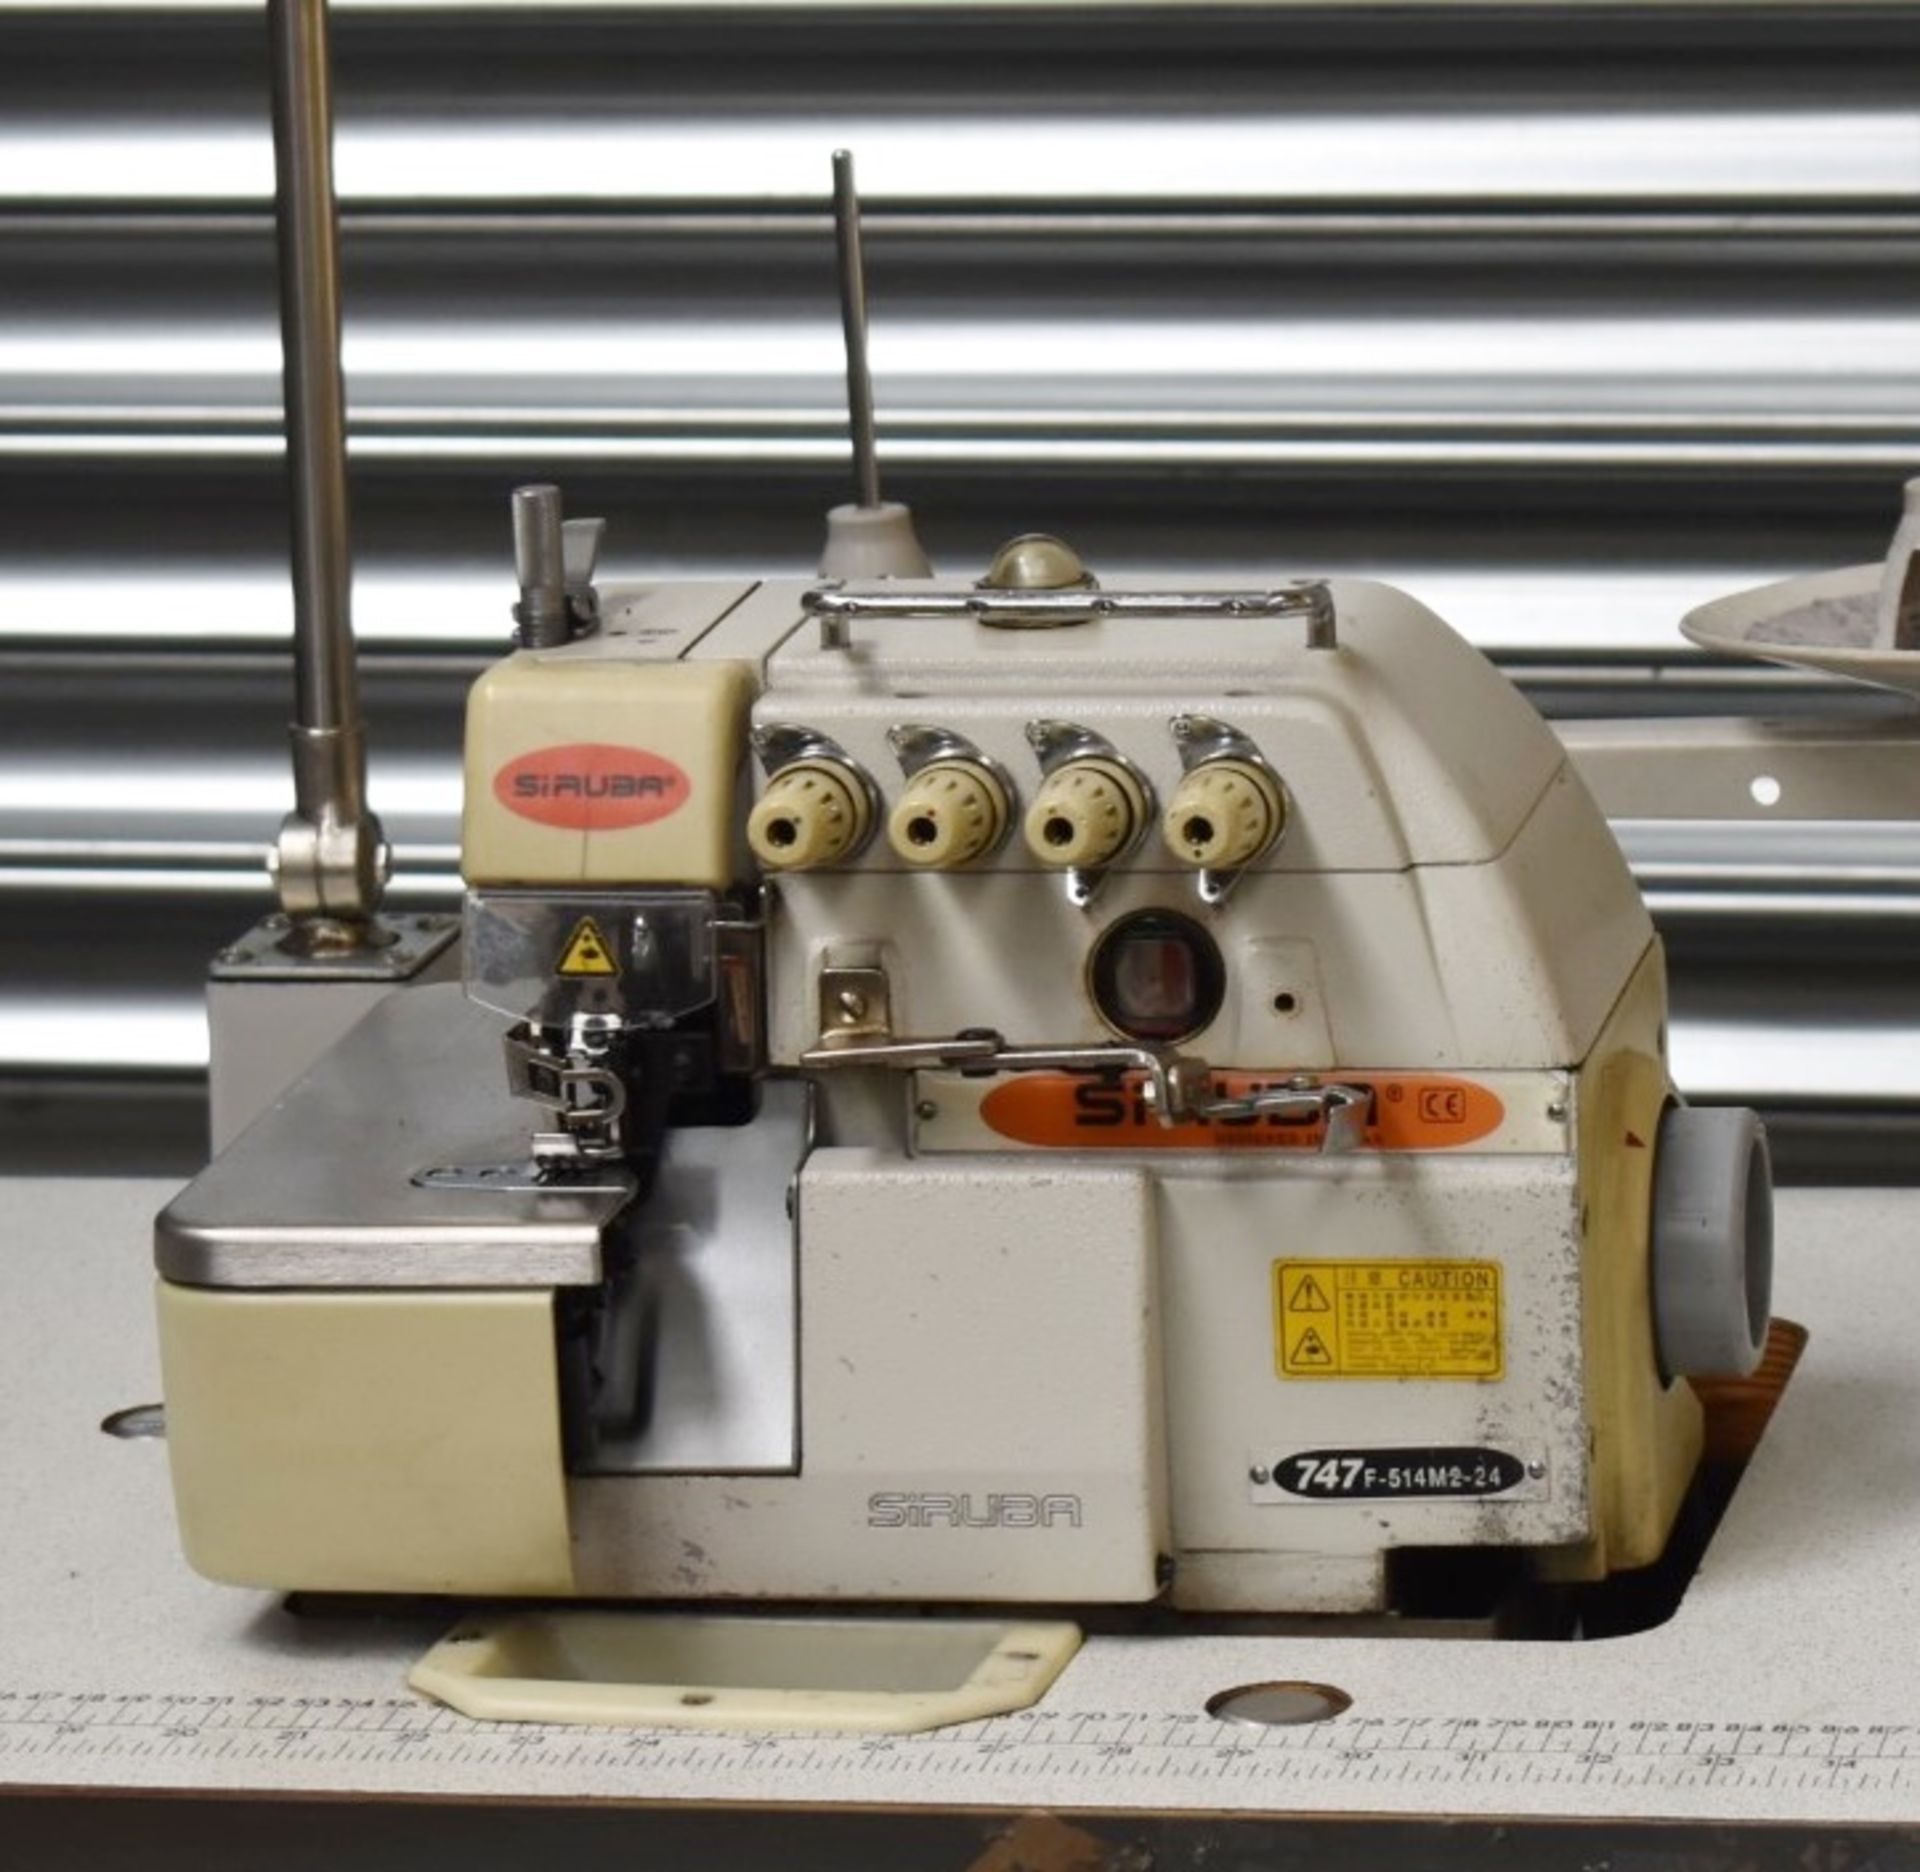 1 x Siruba Overlock Industrial Sewing Machine - Model 747F-514M2 - Image 22 of 38